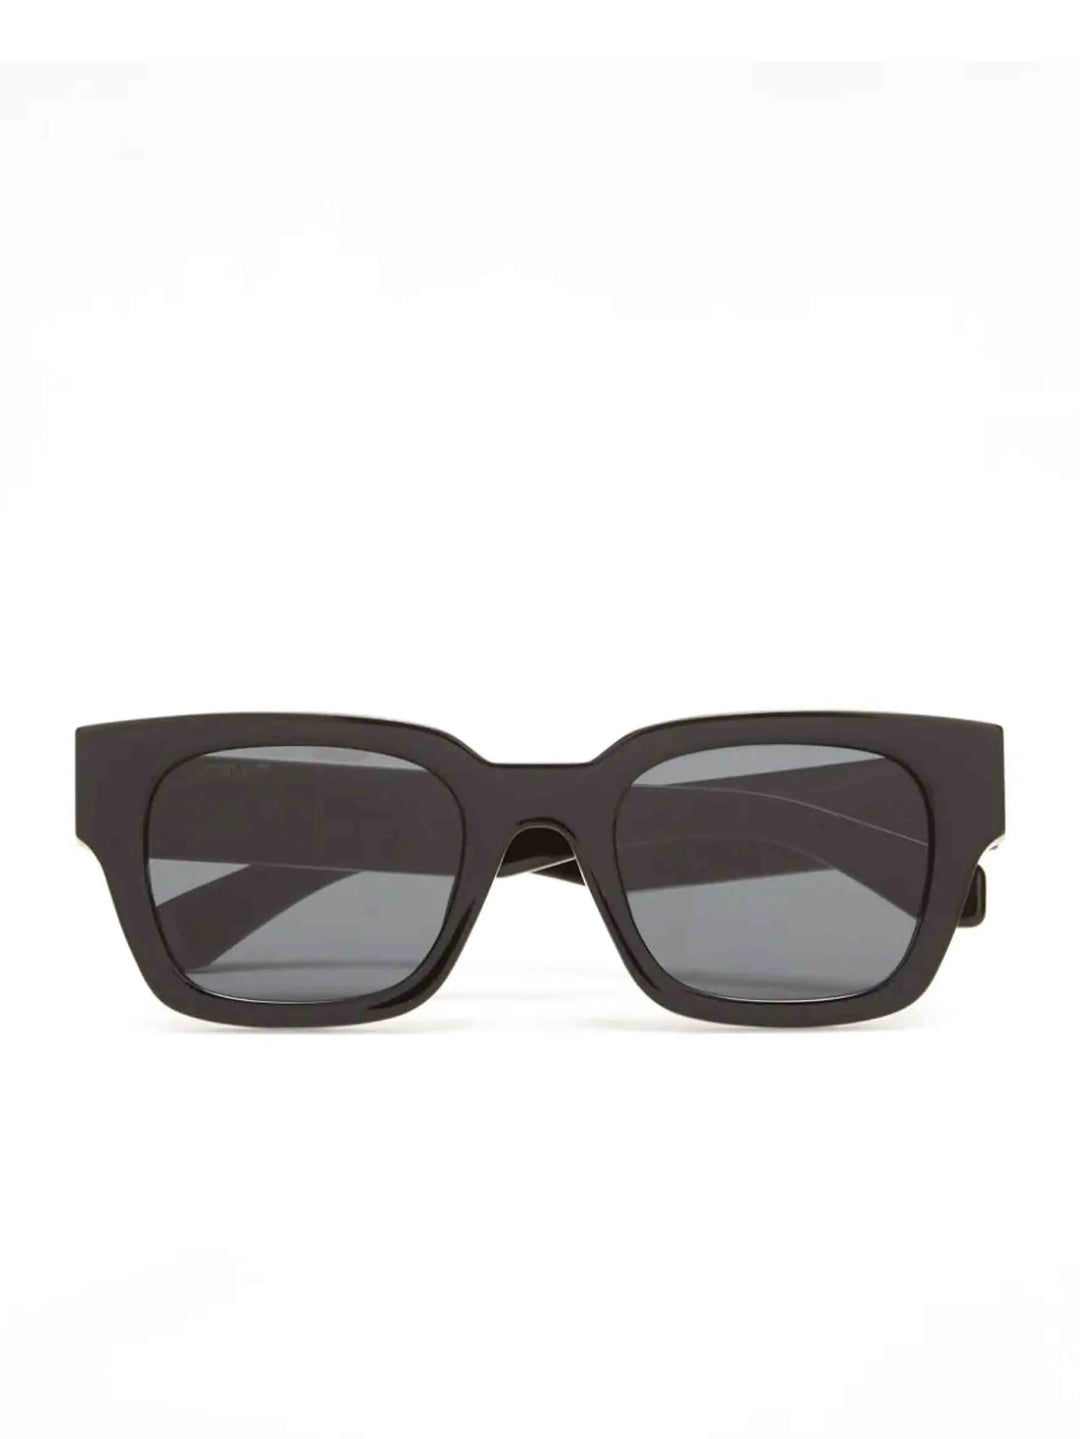 Off-White Zurich Sunglasses Black Prior